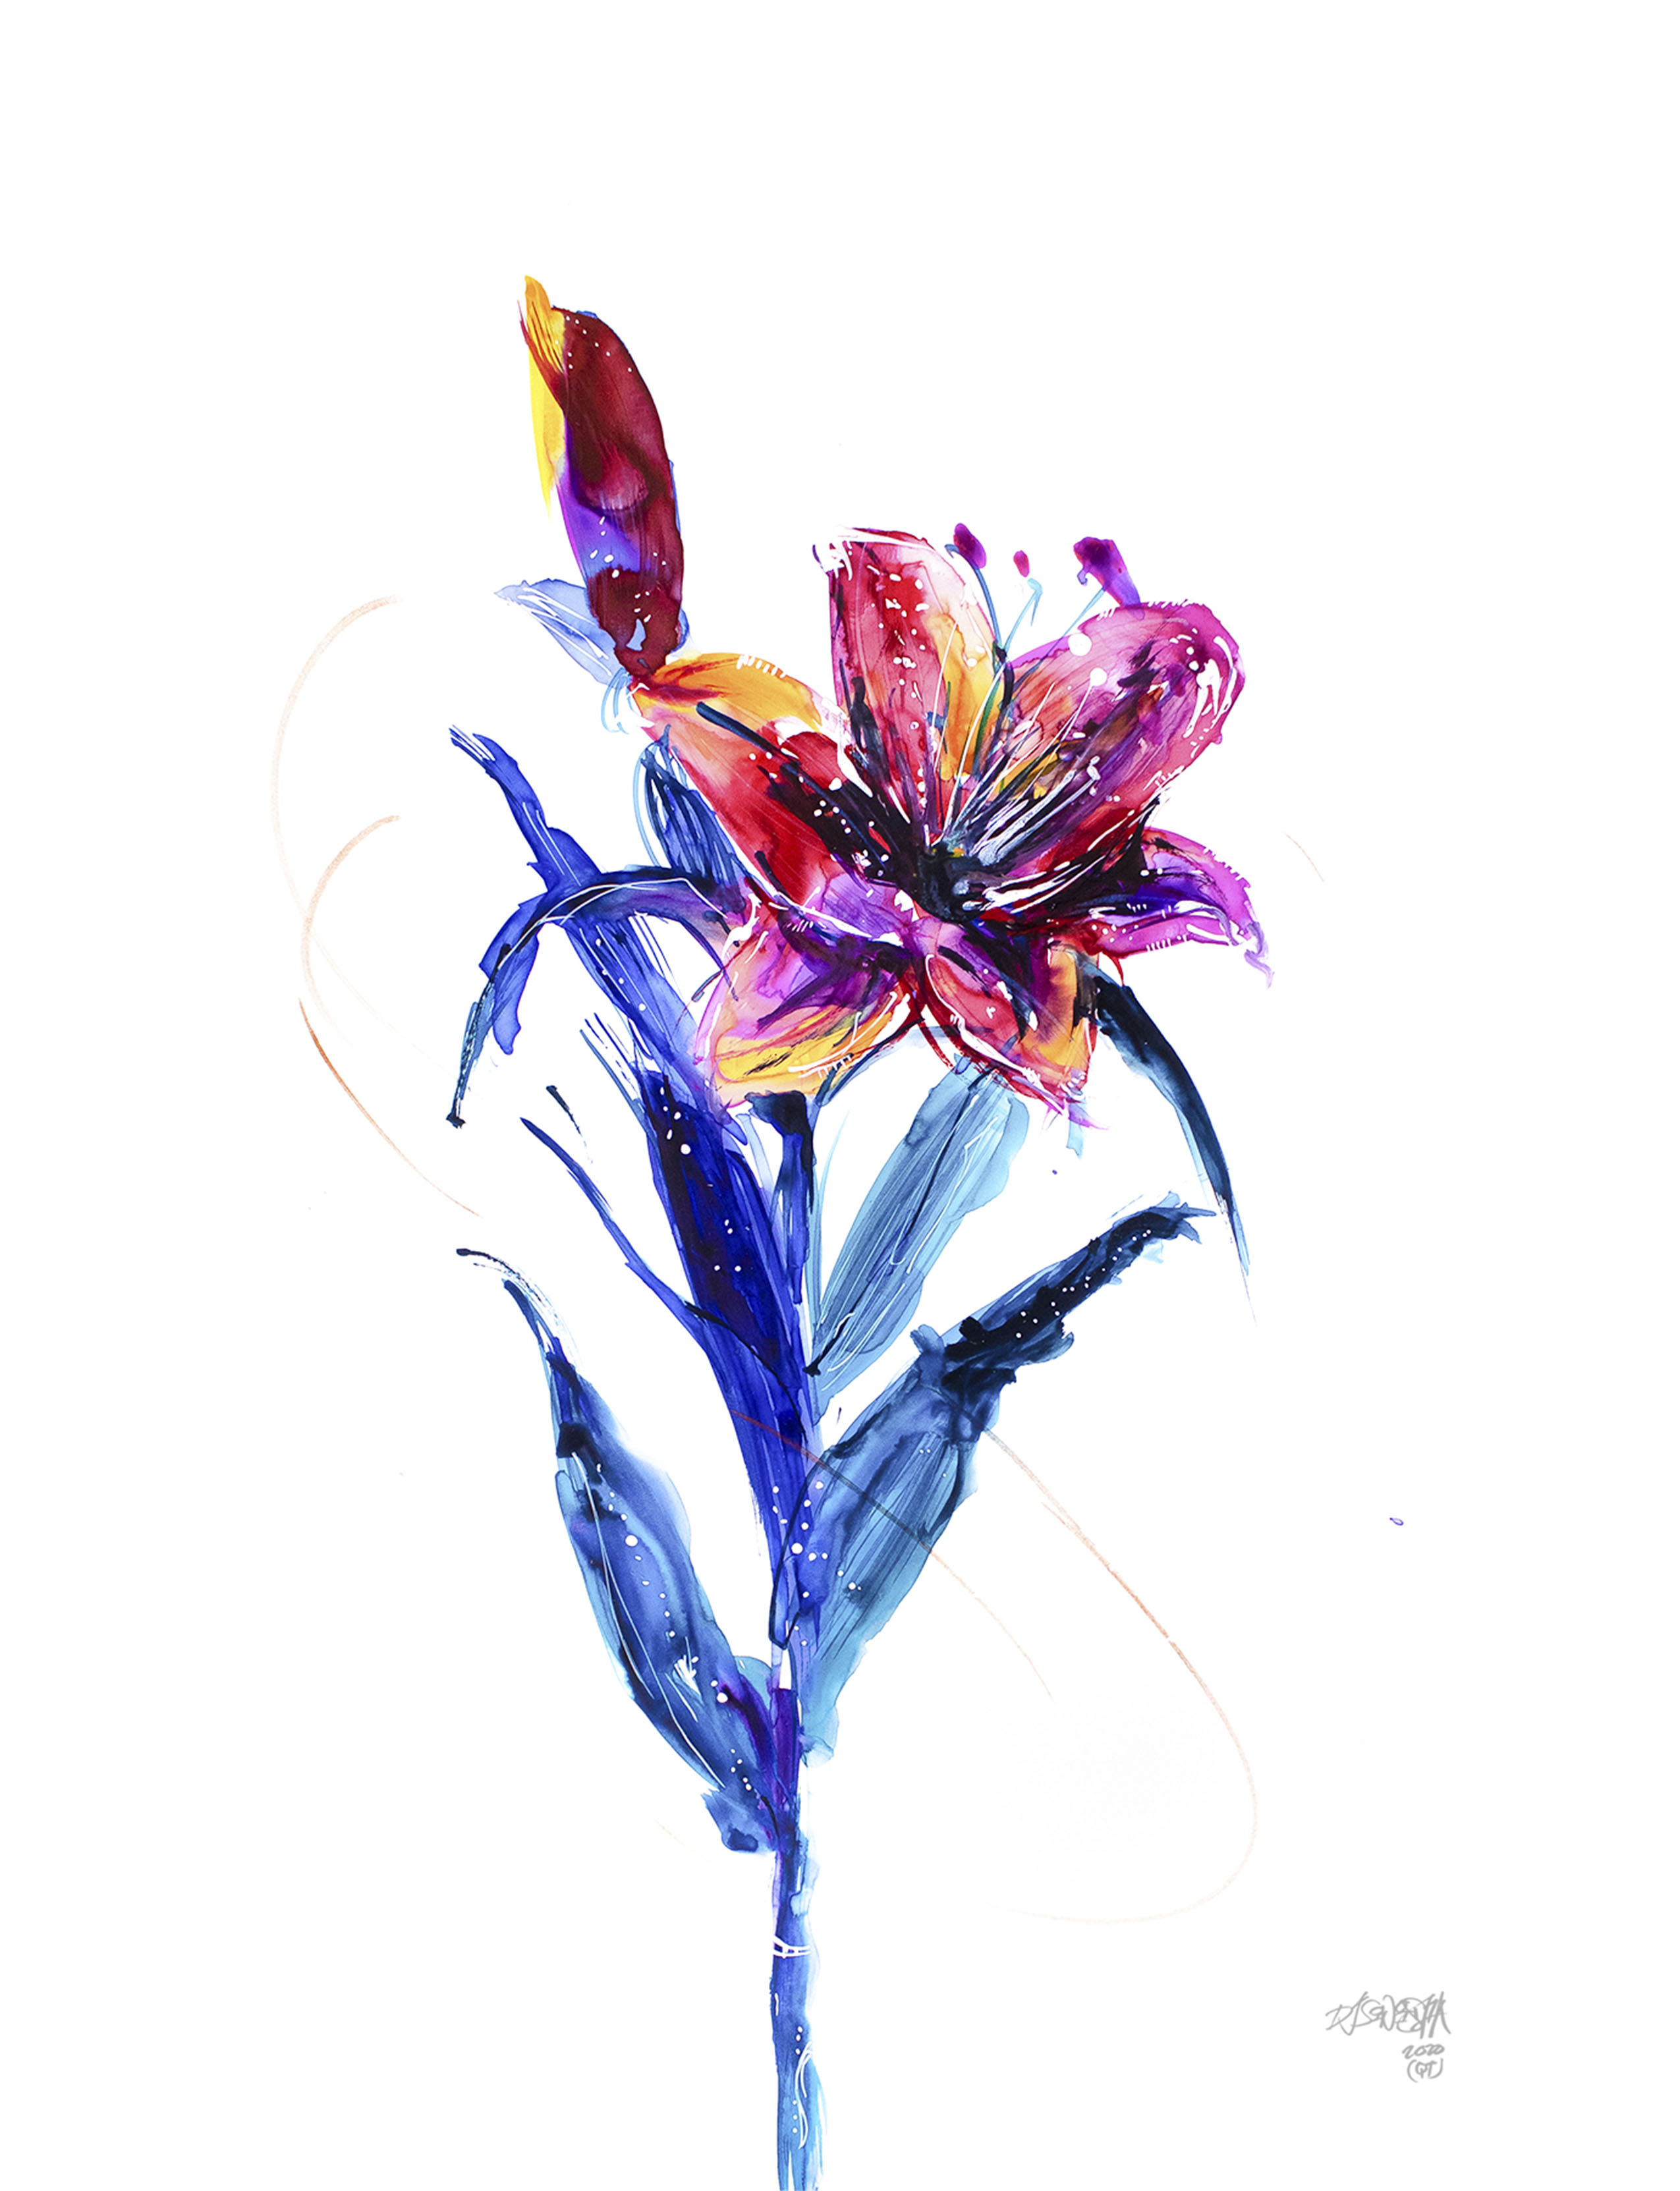 Homage pt1 - Lilies